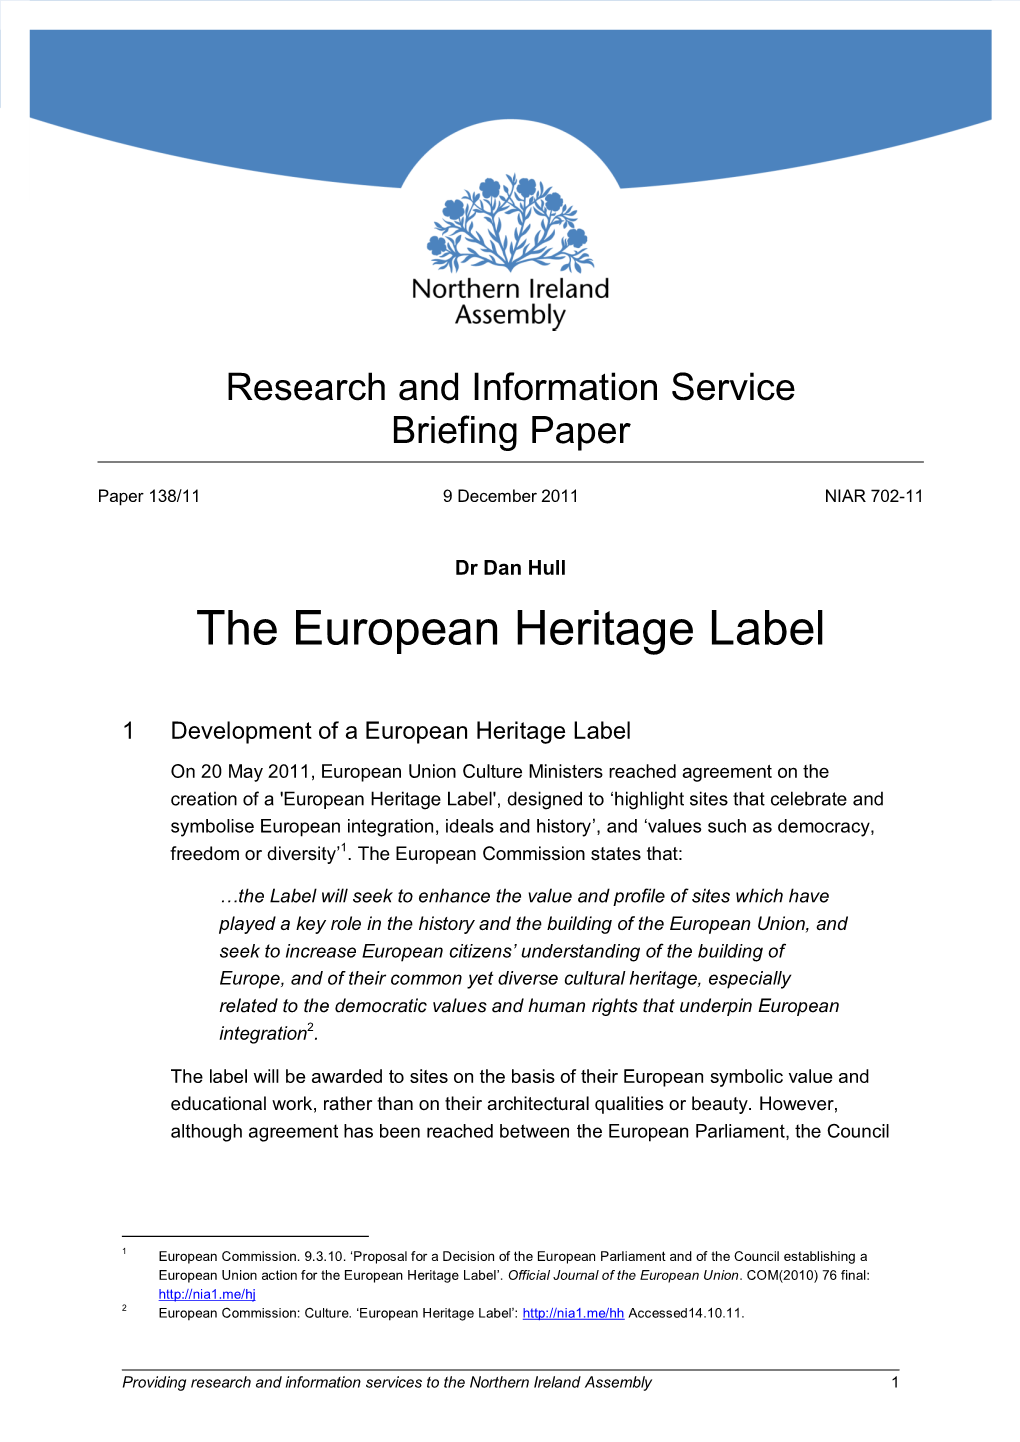 The European Heritage Label